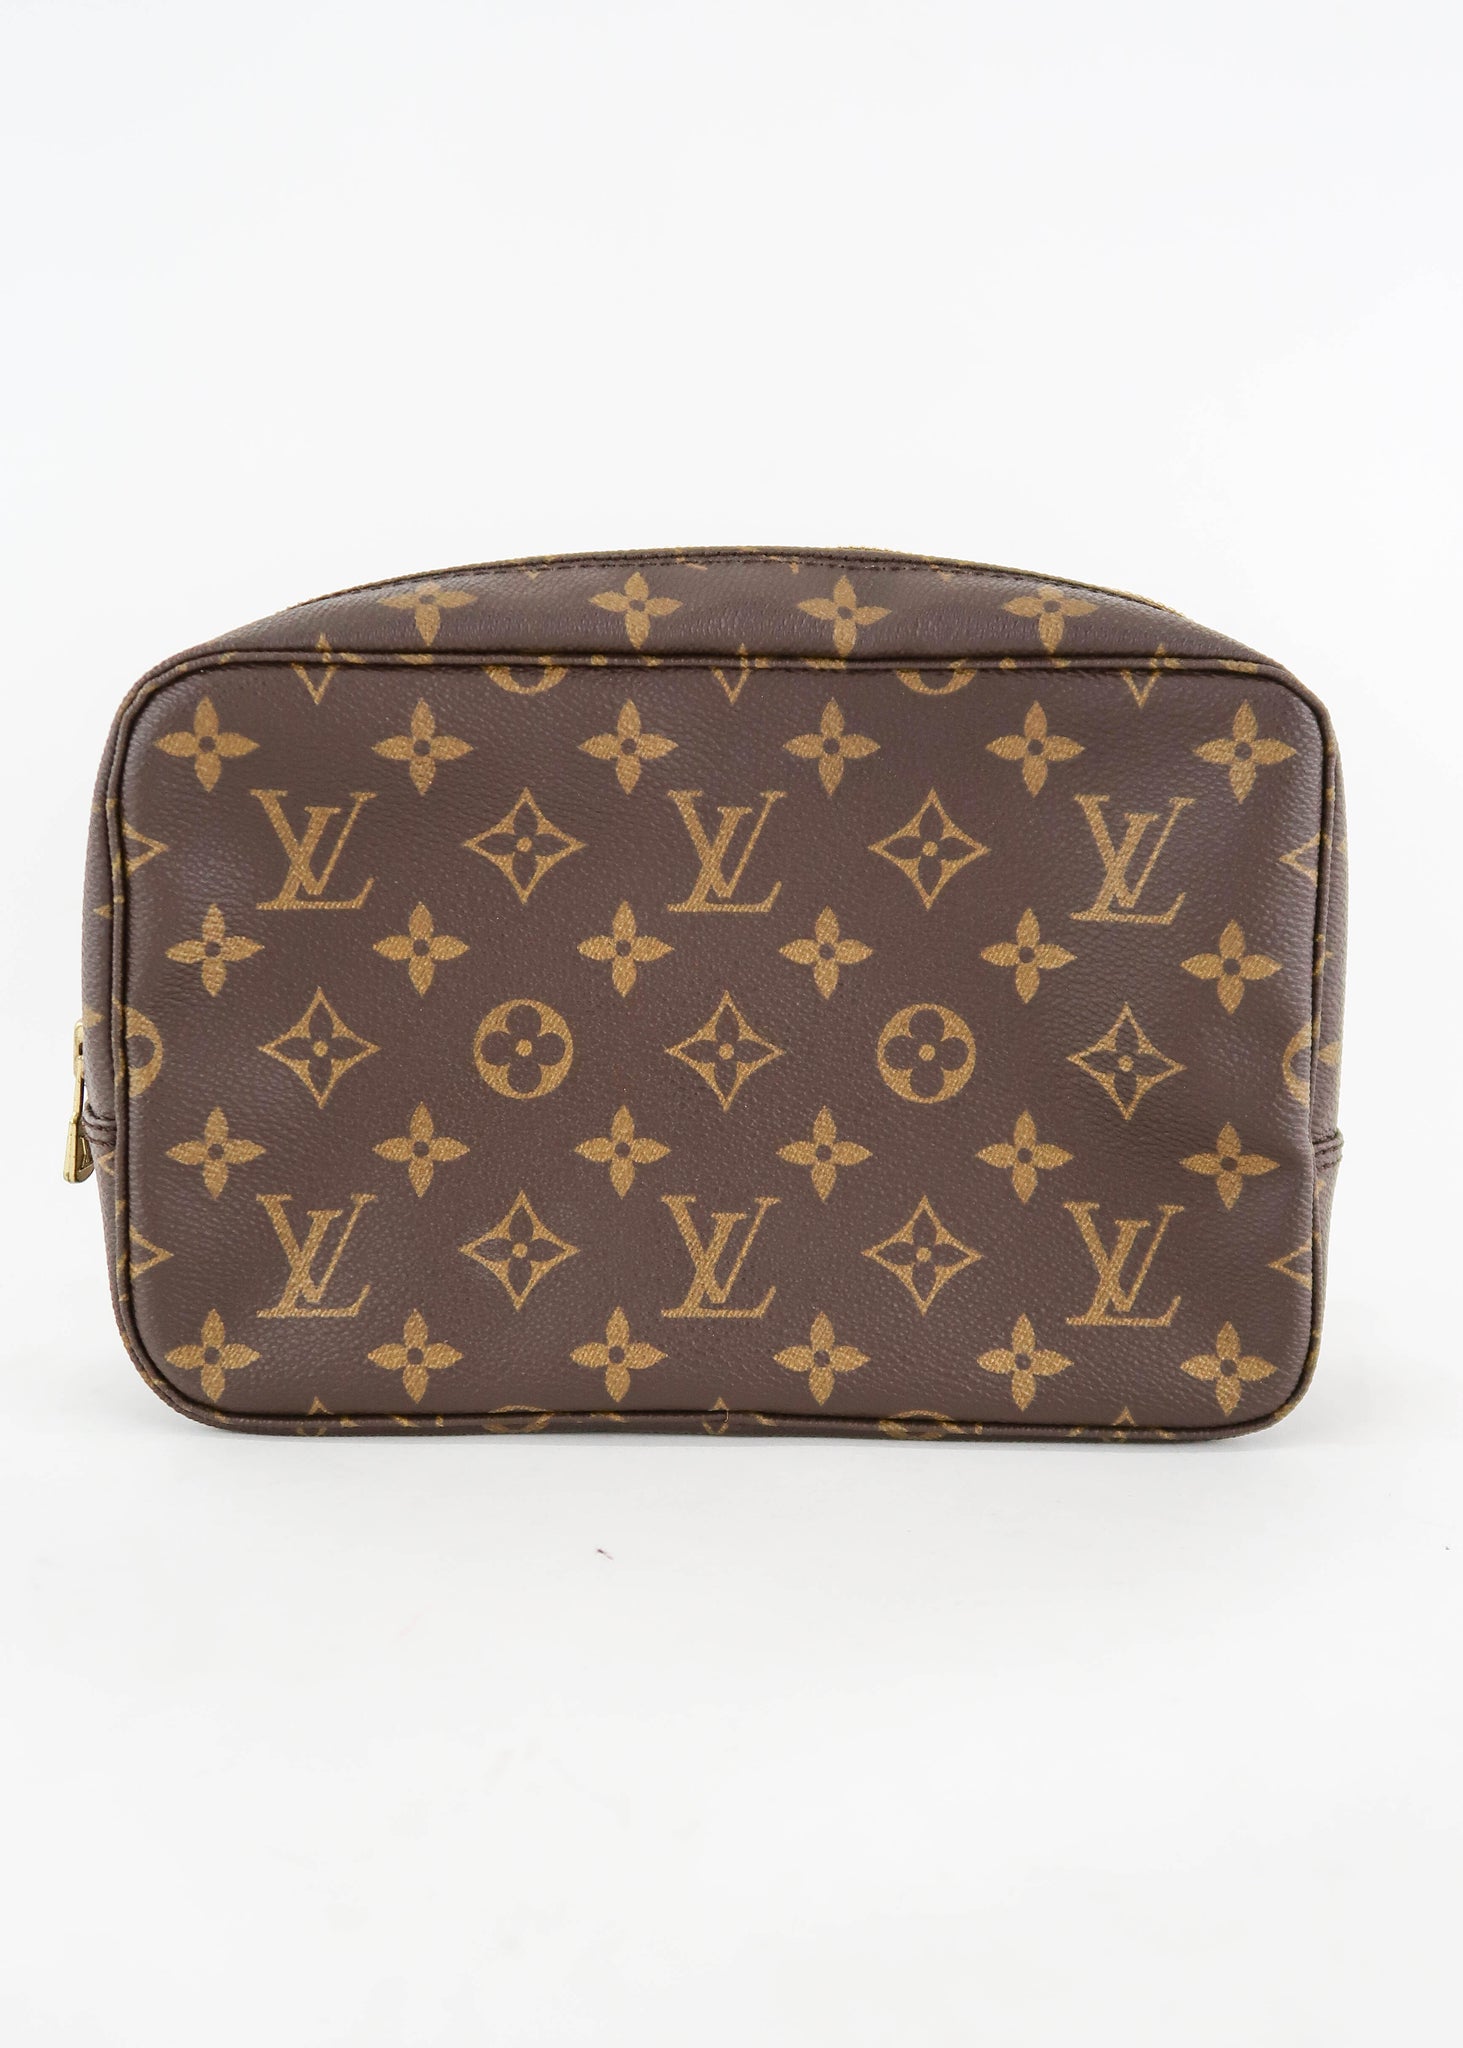 Authentic Louis Vuitton Brown Canvas Monogram Toiletry 23 Cosmetic Bag